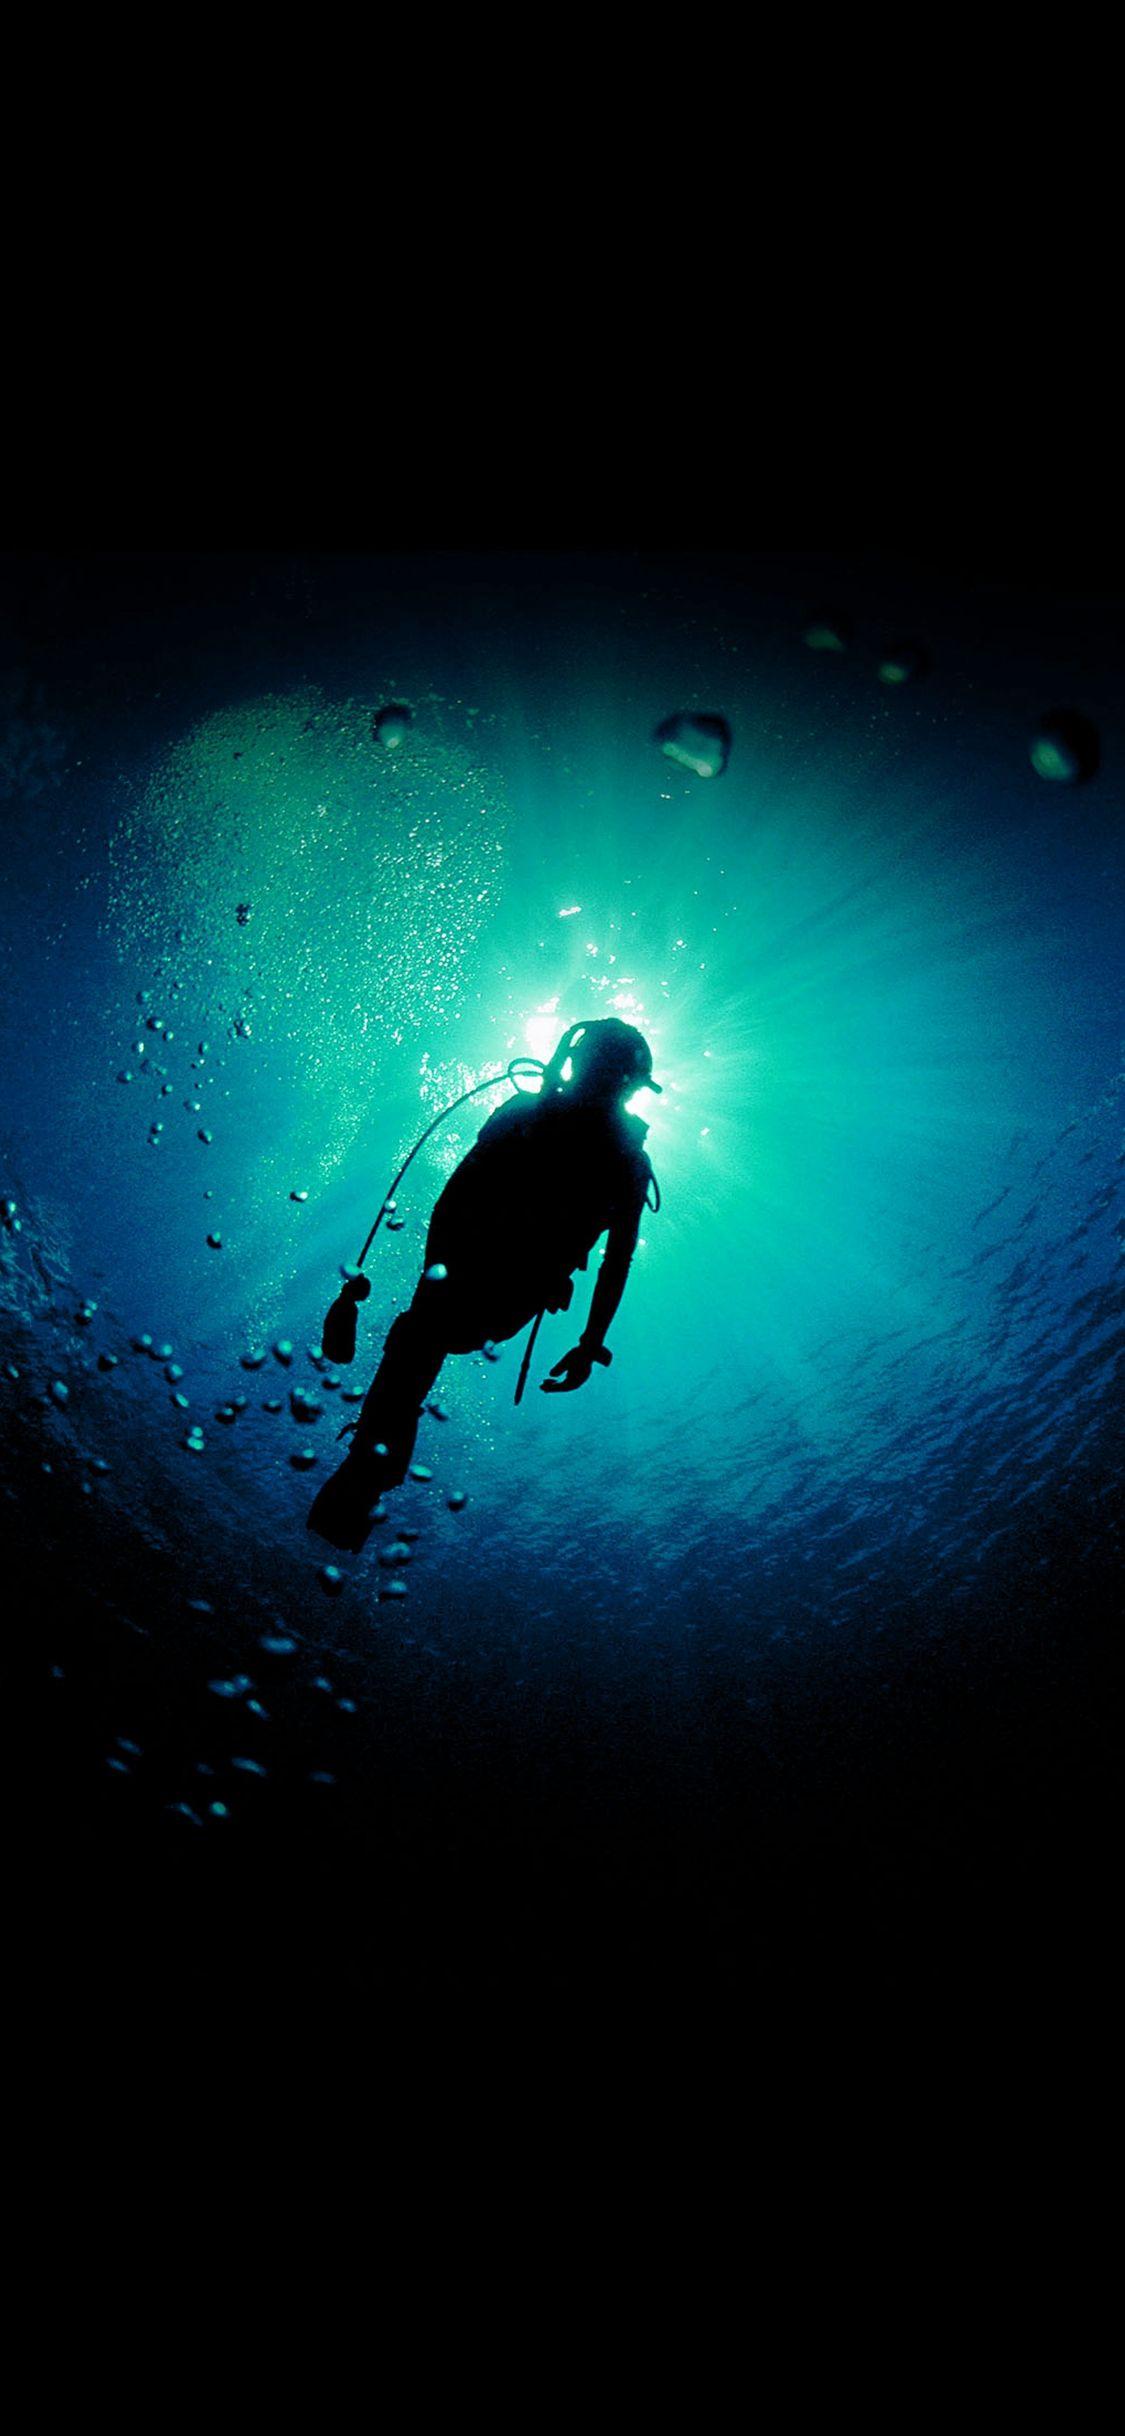 Scuba Diving Photos Download The BEST Free Scuba Diving Stock Photos  HD  Images